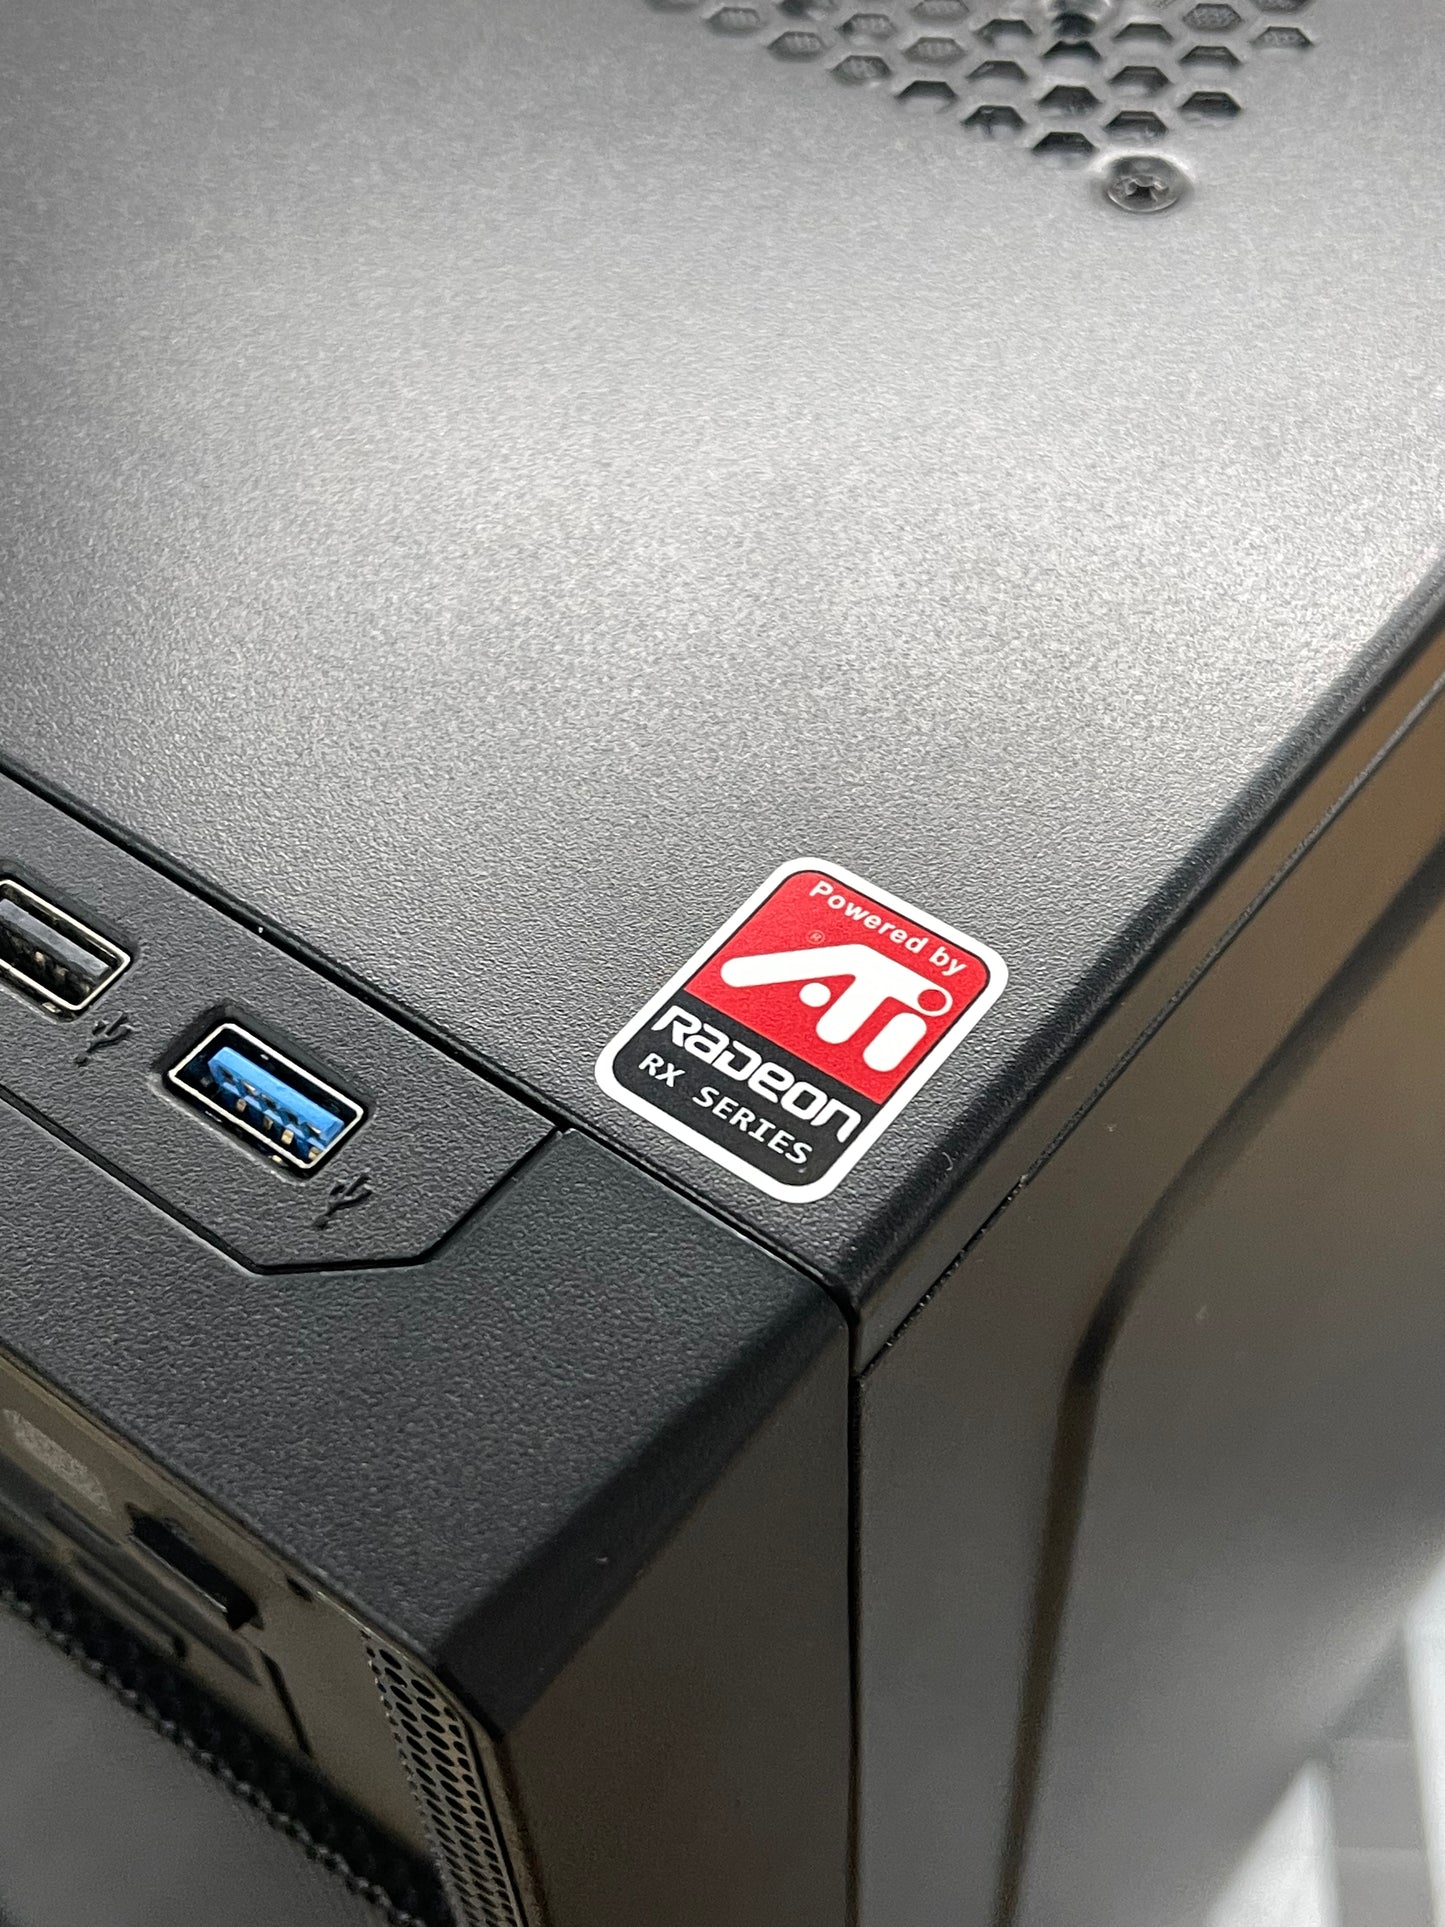 ATI Radeon RX Series, Powered By Case Badge Sticker - White